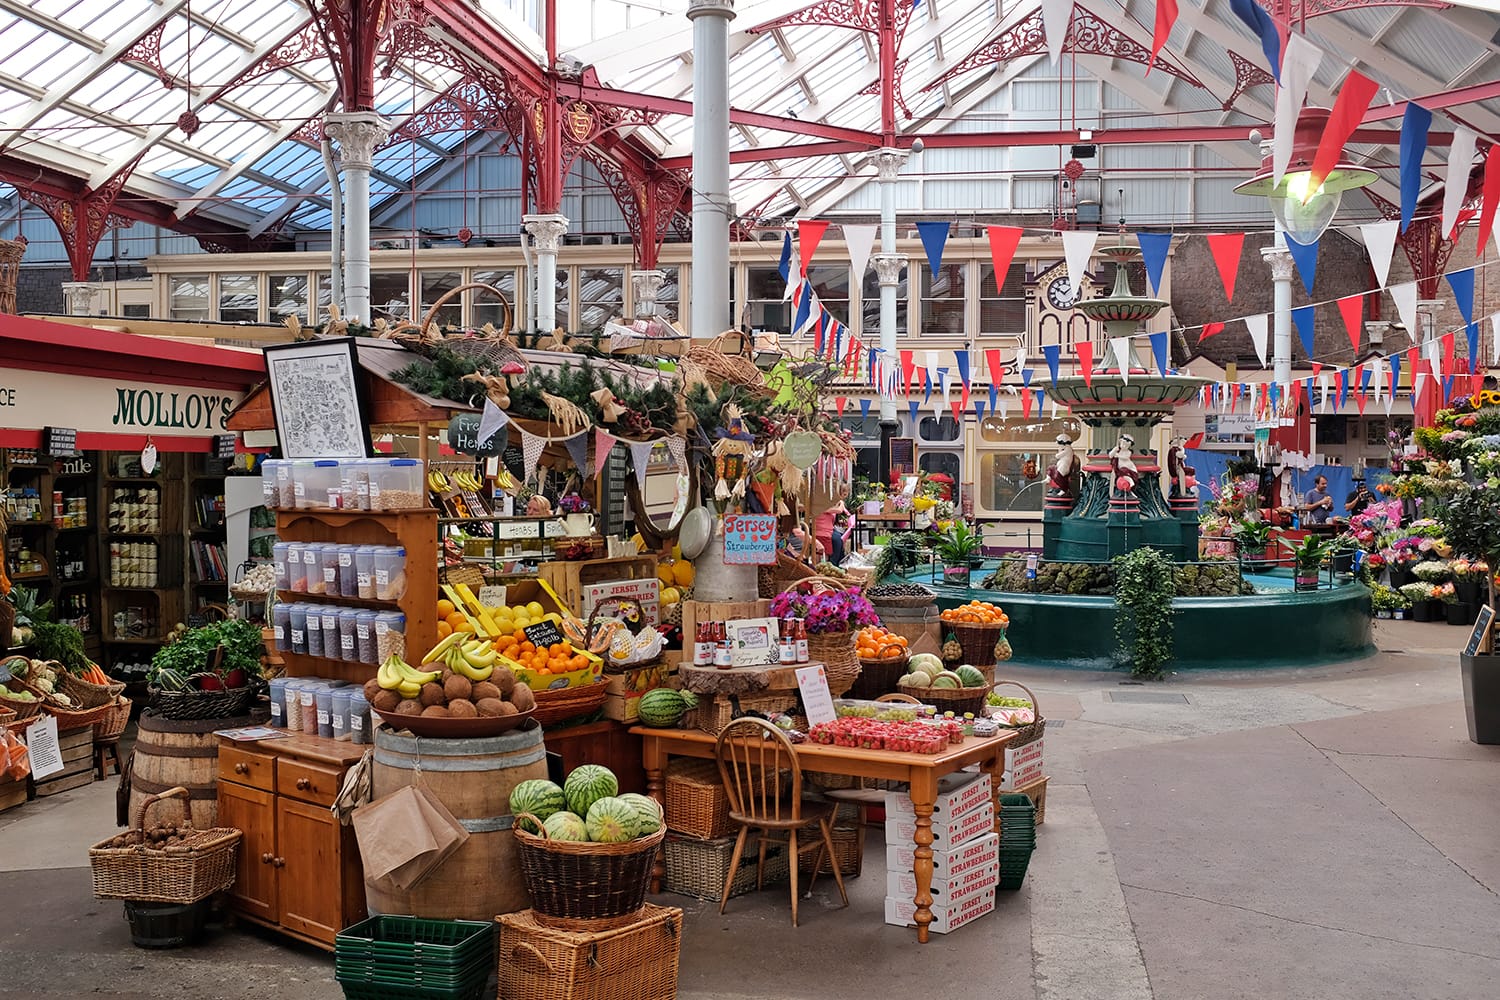 The central market in St. Helier, Jersey, Channel Islands